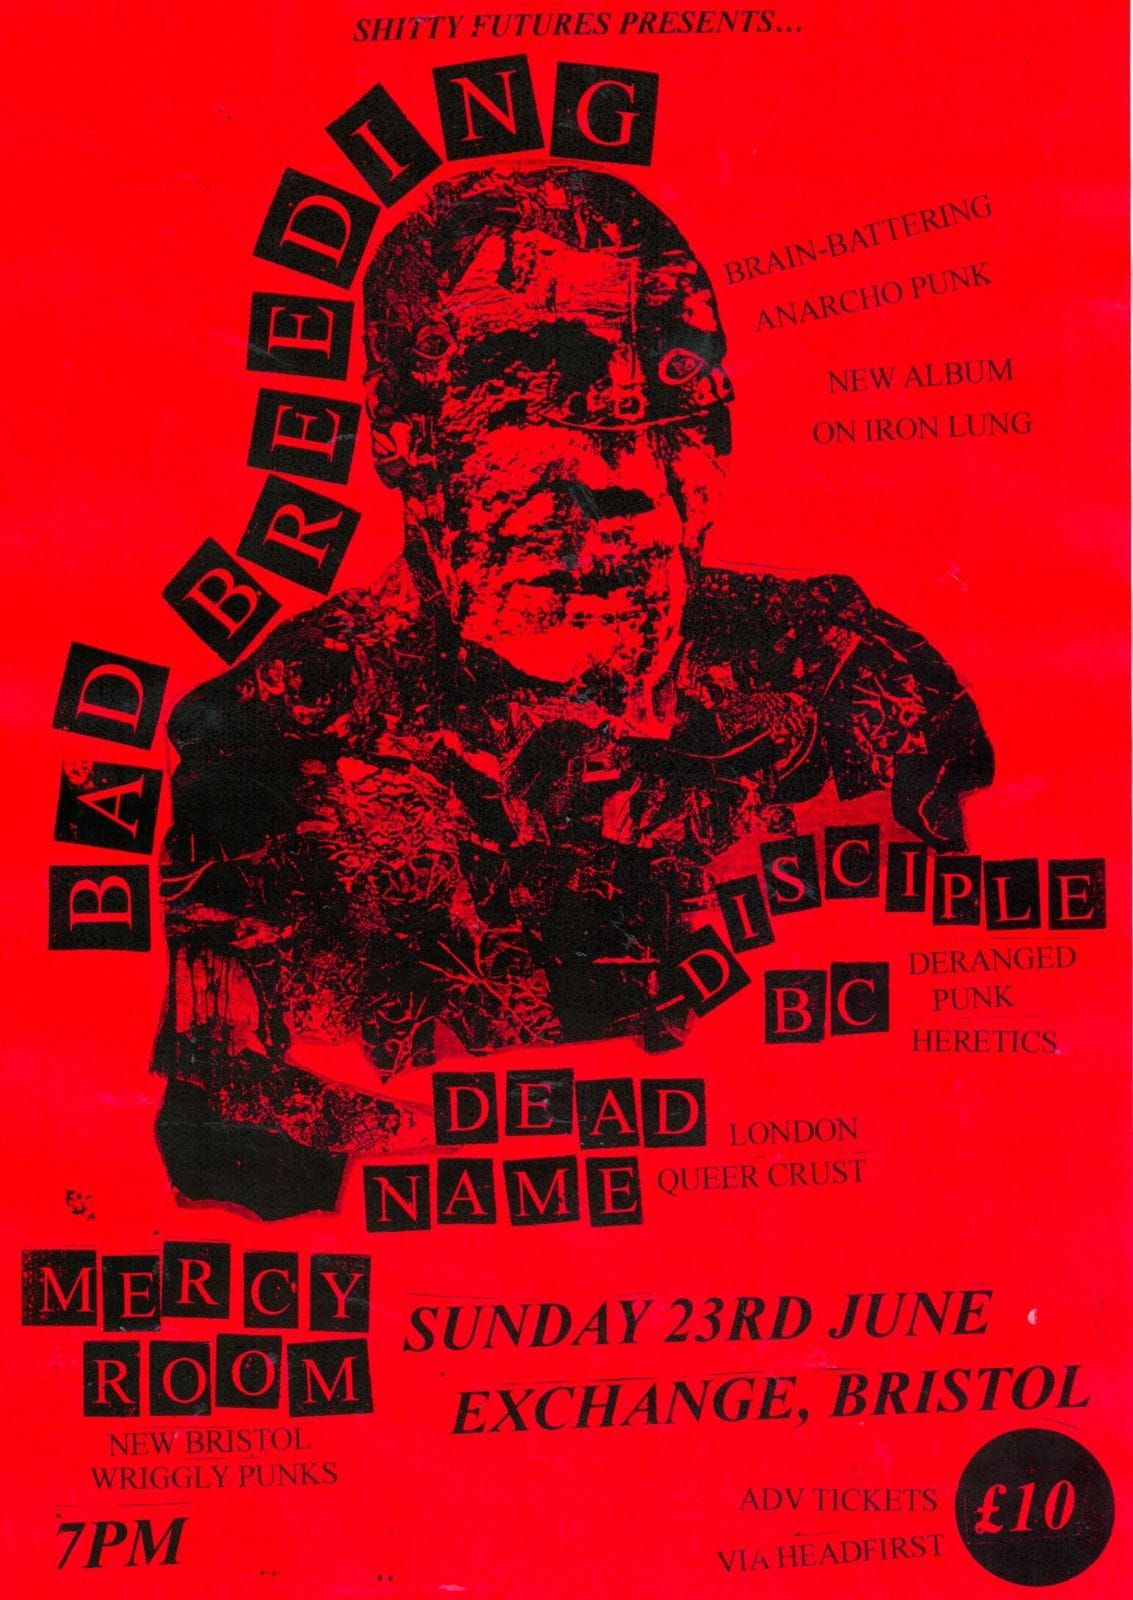 Bad Breeding, Disciple BC, Dead Name, & Mercy Room @ Exchange, Bristol